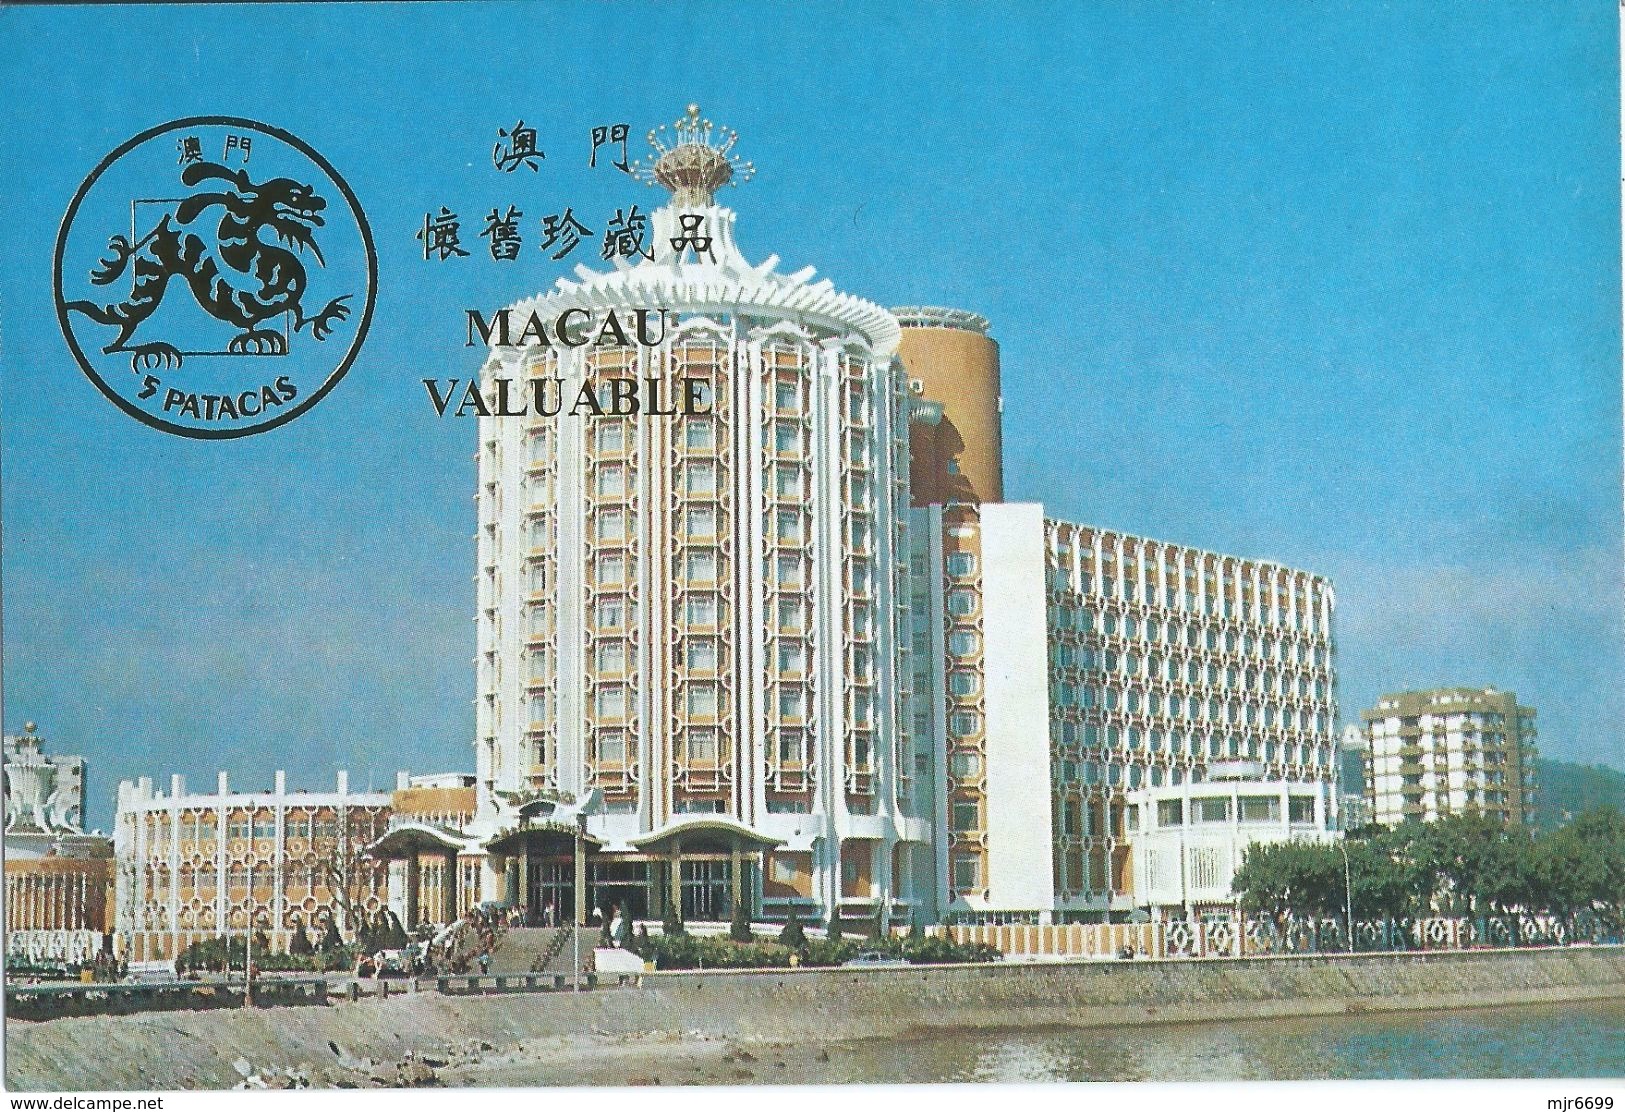 MACAU-THE HOTEL/CASINO LISBOA #7 (WITH JAPANESE DESCRIPTION) - Macau